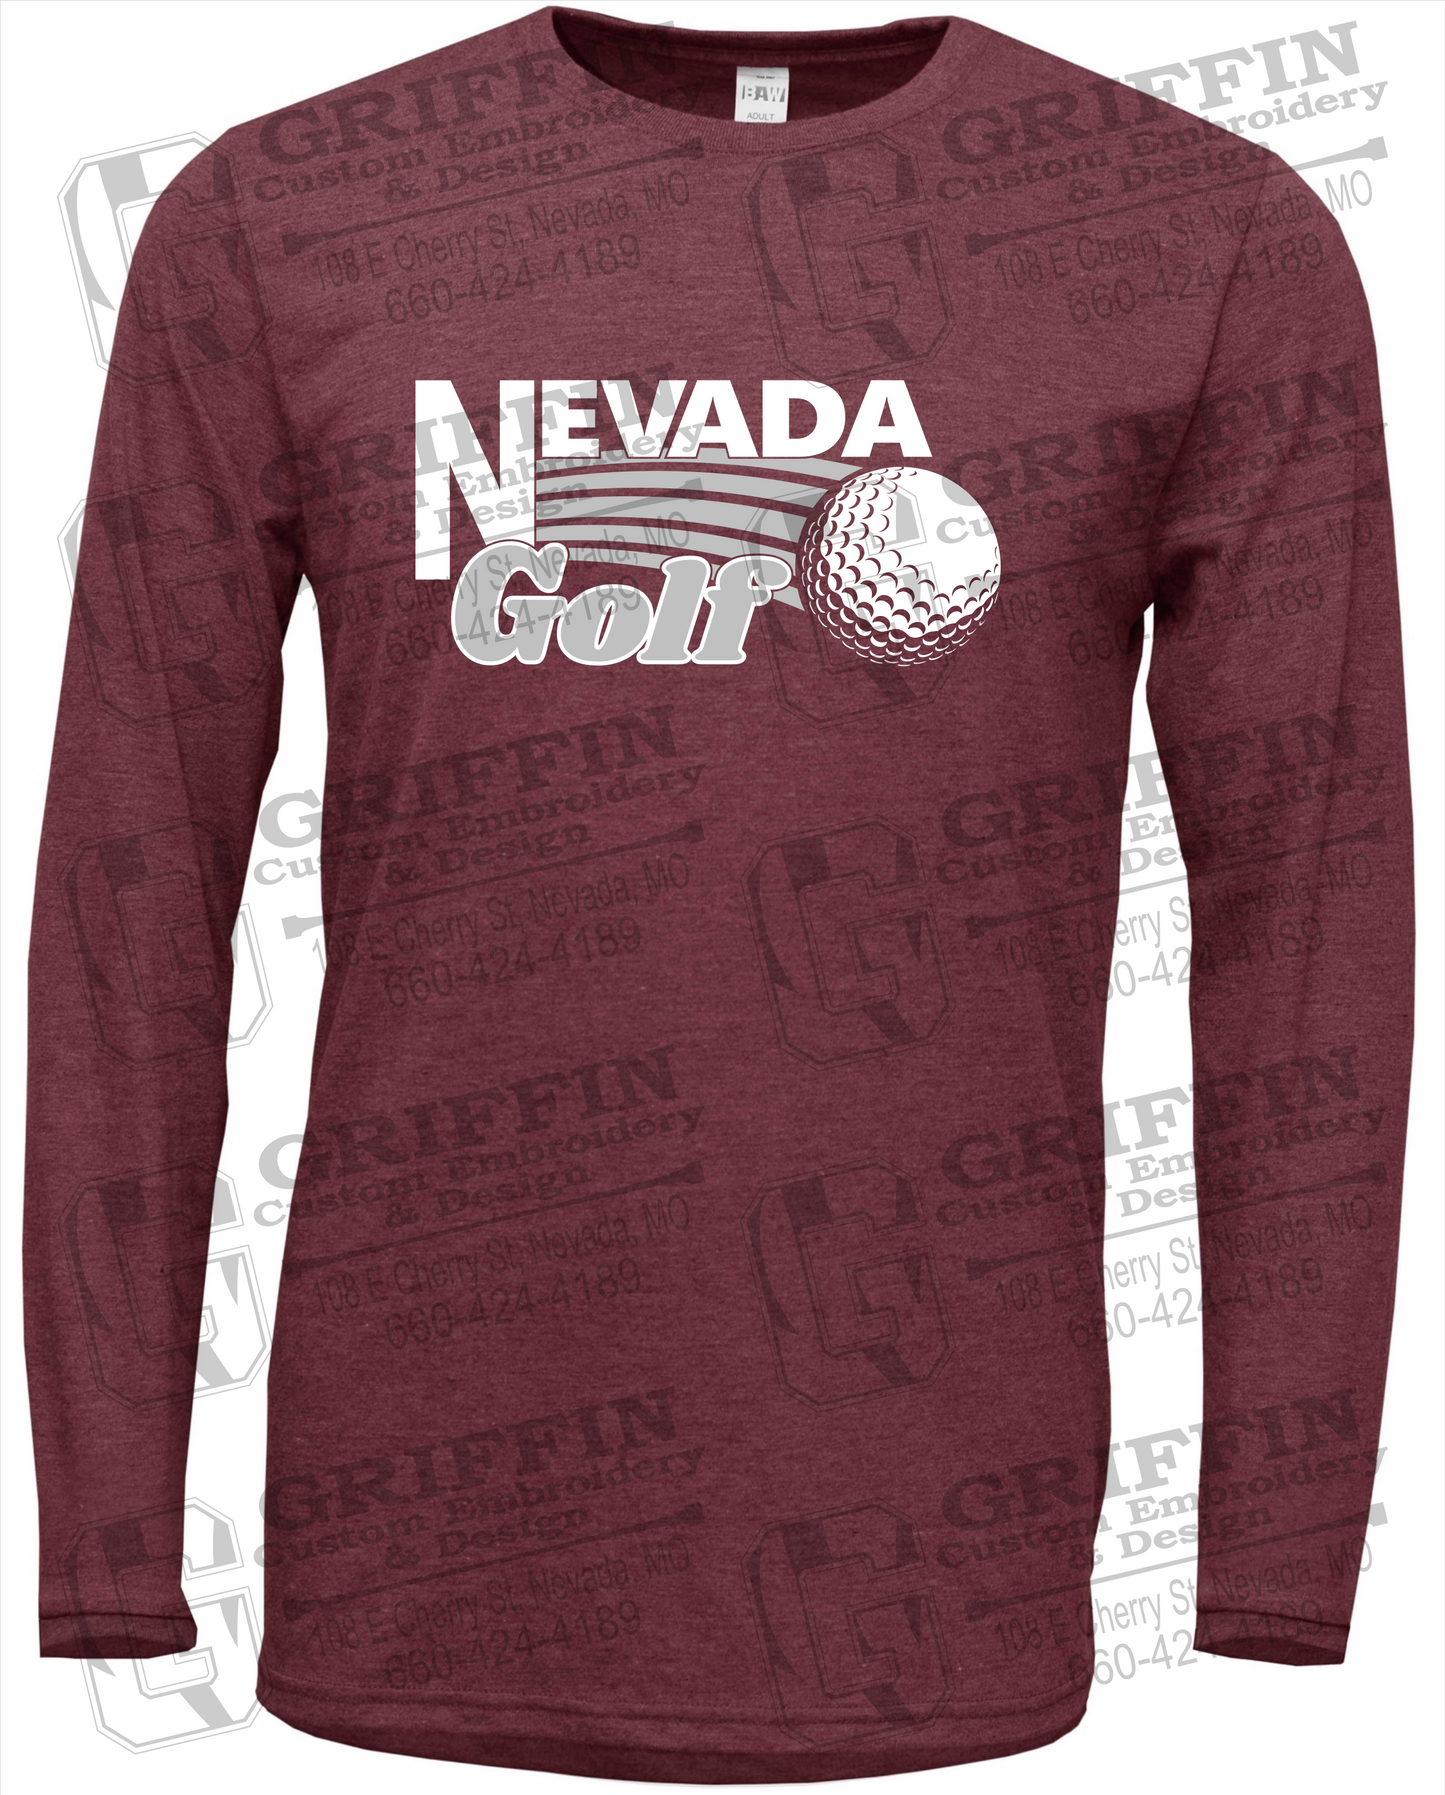 Soft-Tek Long Sleeve T-Shirt - Golf - Nevada Tigers 21-W